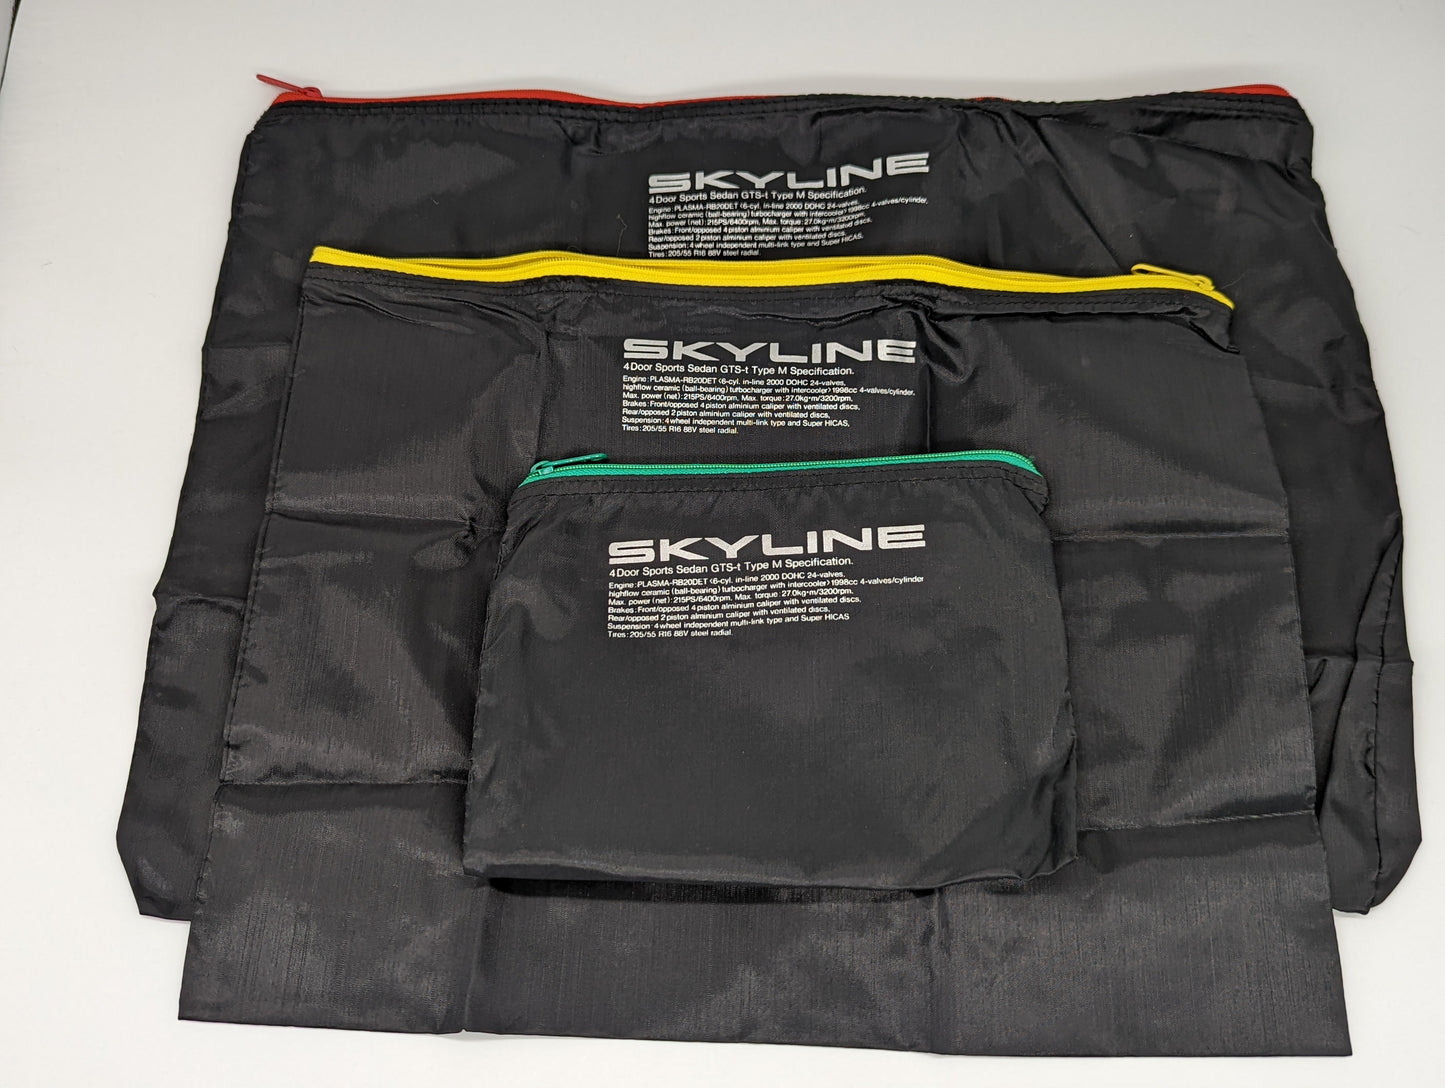 Nissan Skyline 3pc pouch set